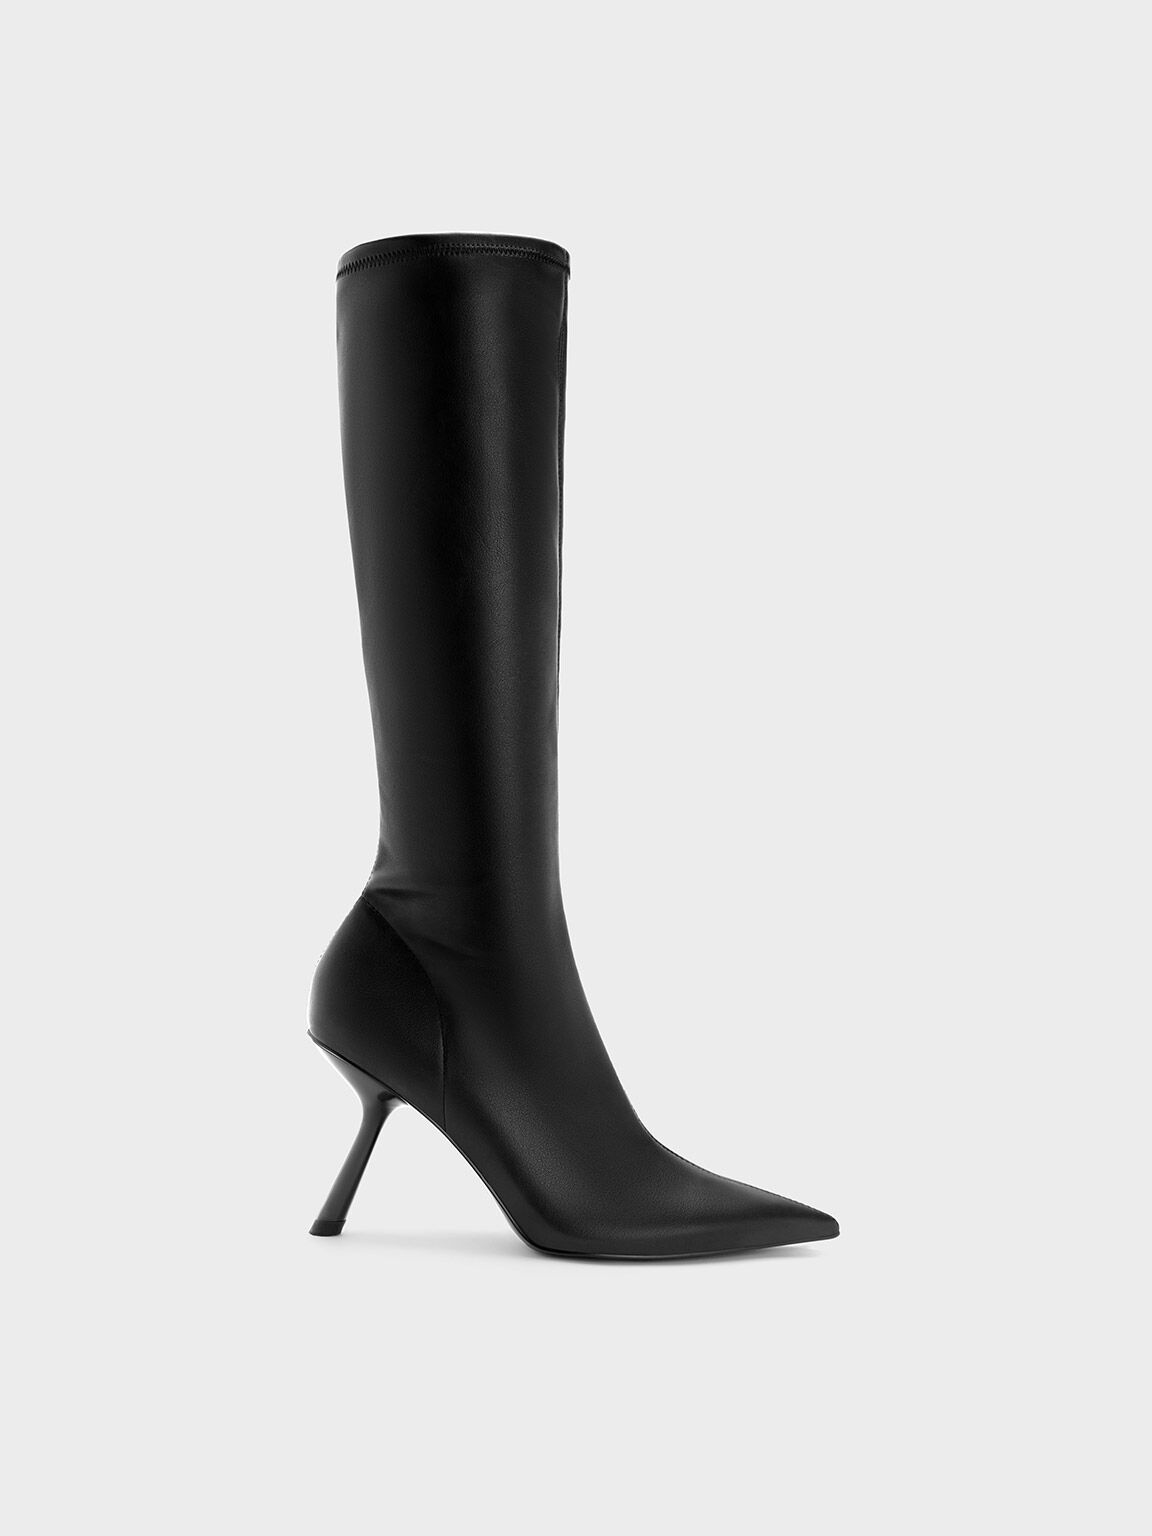 Jimmy Choo Black Leather Round Toe Side Zip High Heel Knee Women's Boots  37.5 | eBay